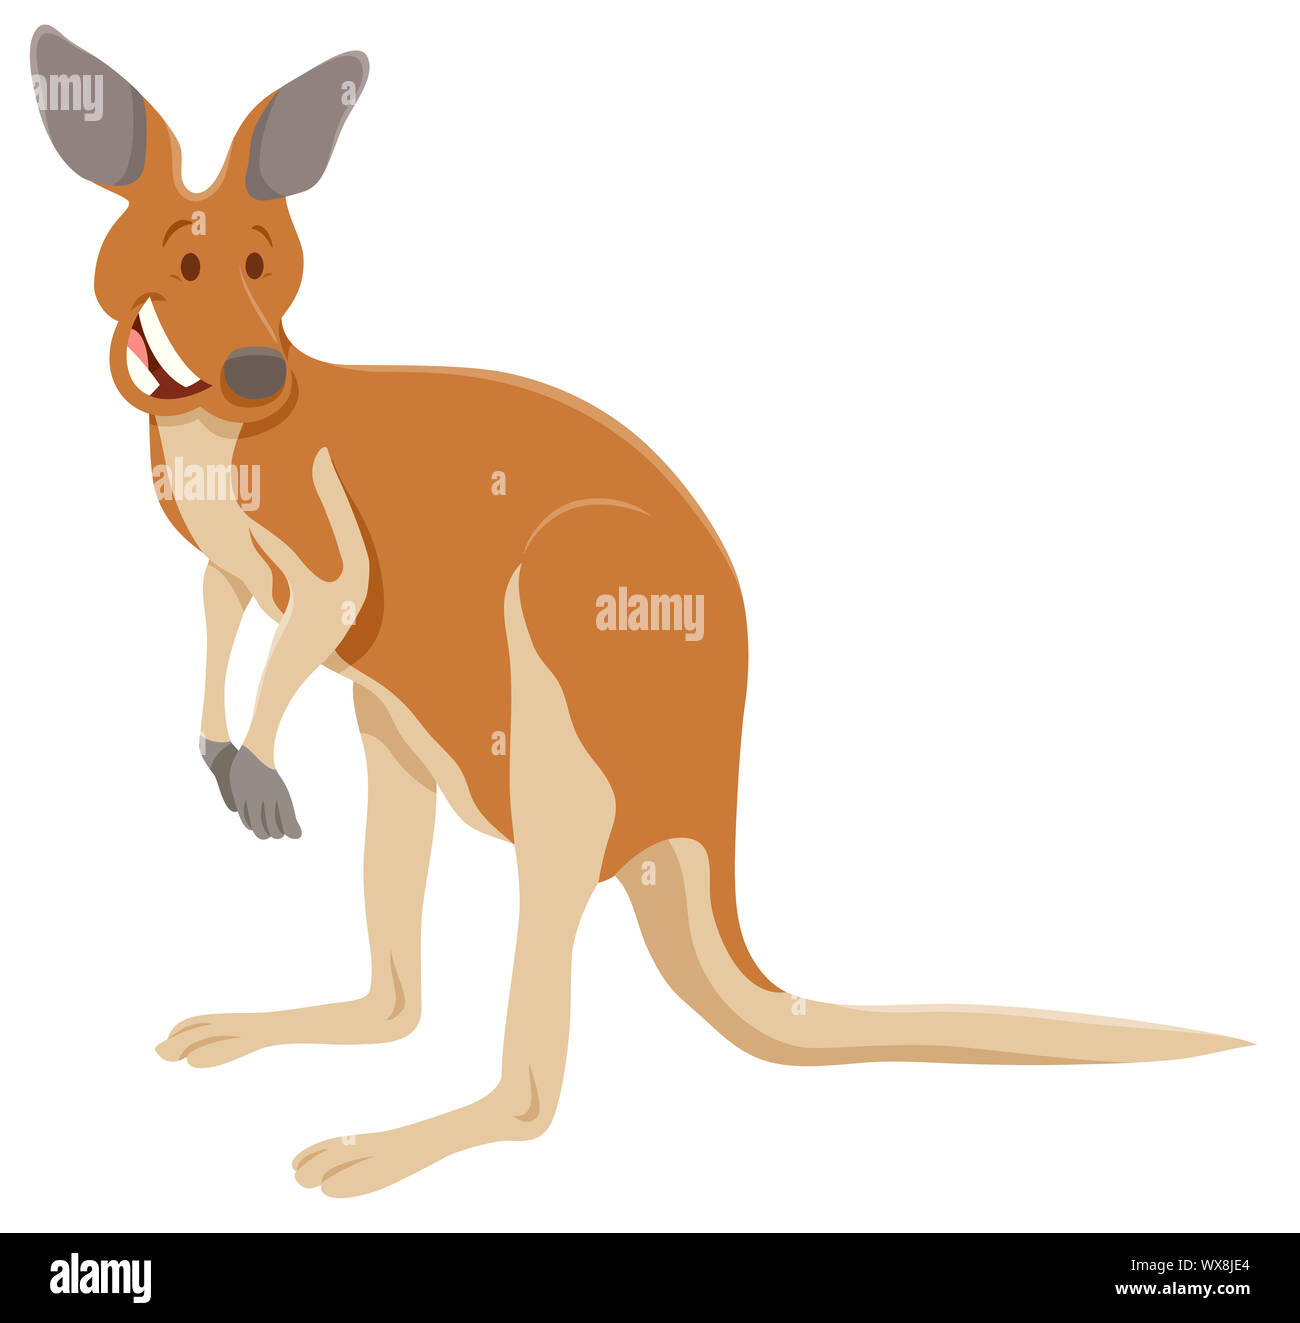 funny kangaroo cartoon animal character Stock Photo - Alamy